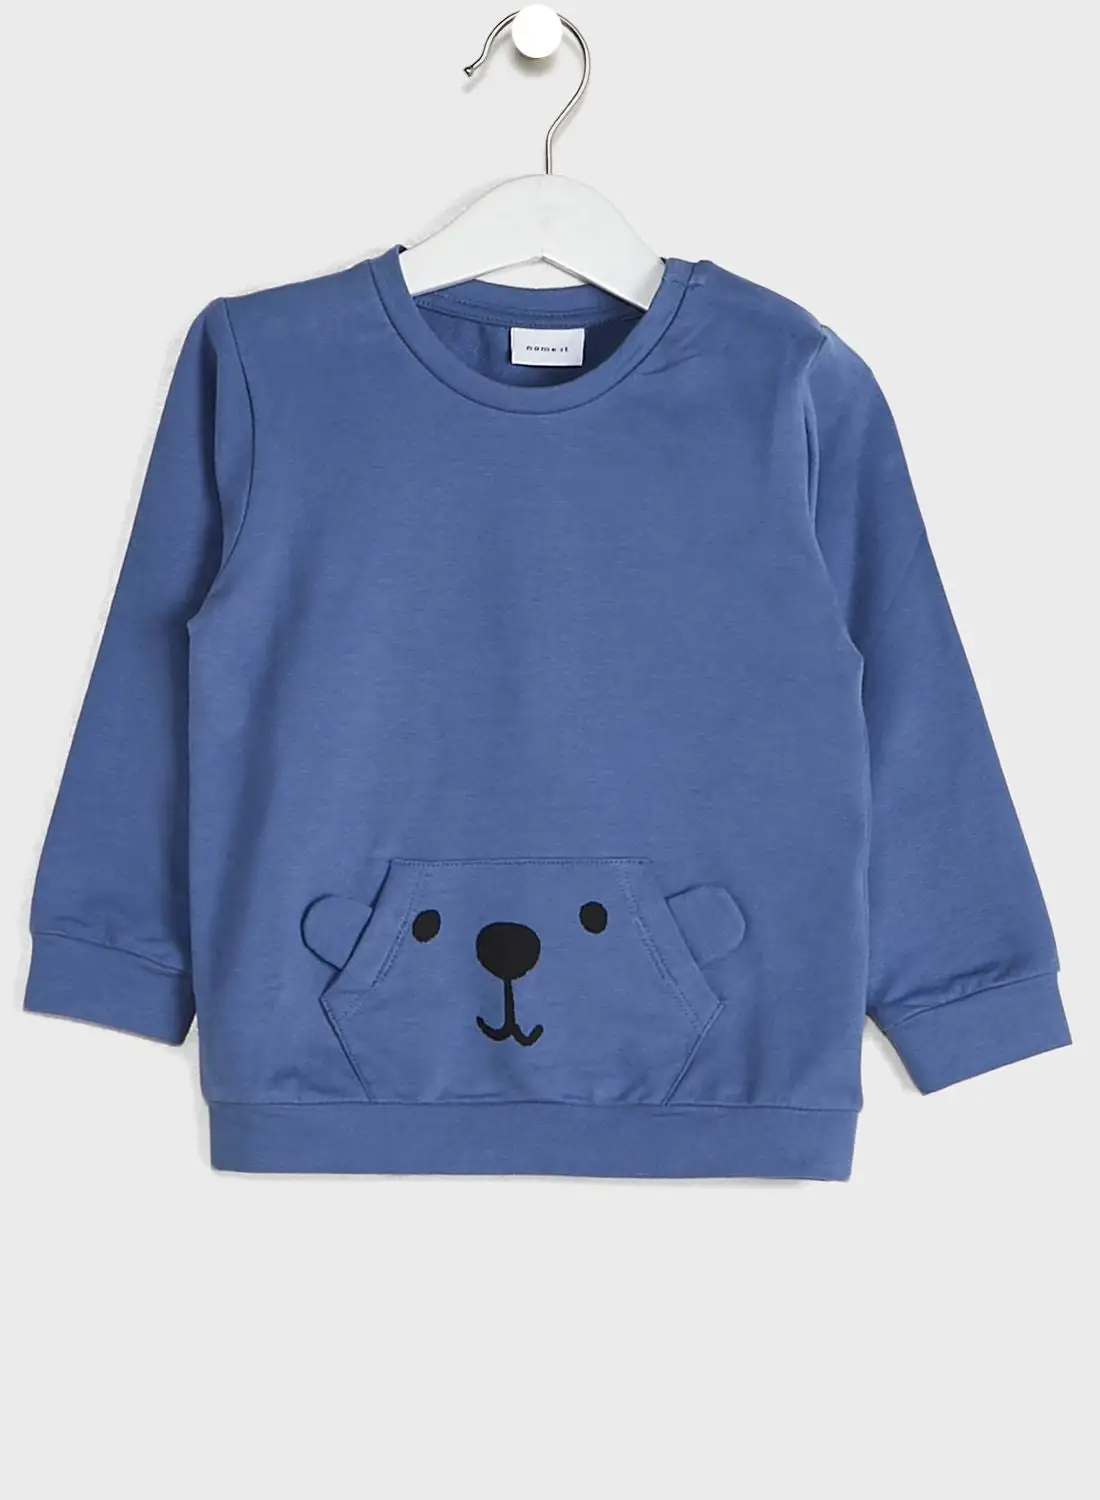 NAME IT Infant Essential Sweatshirt